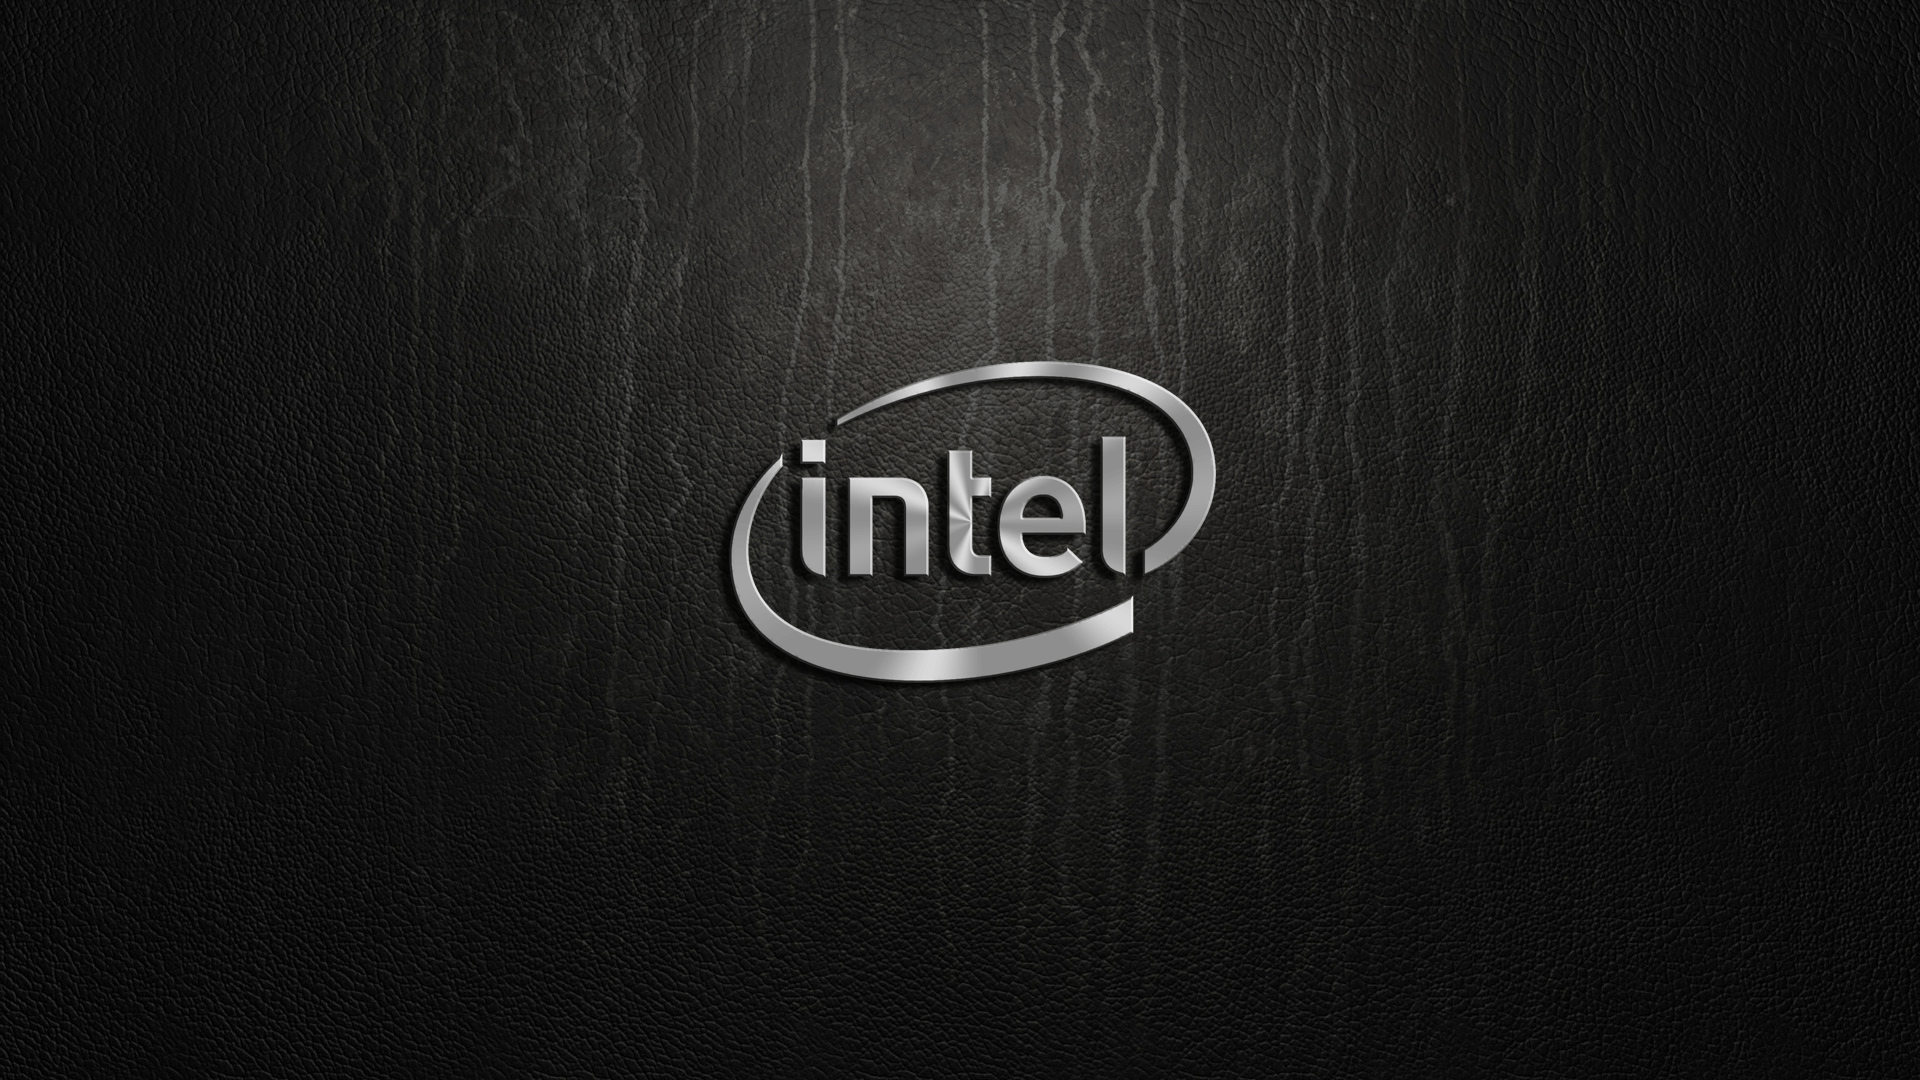 Intel I5 Wallpapers